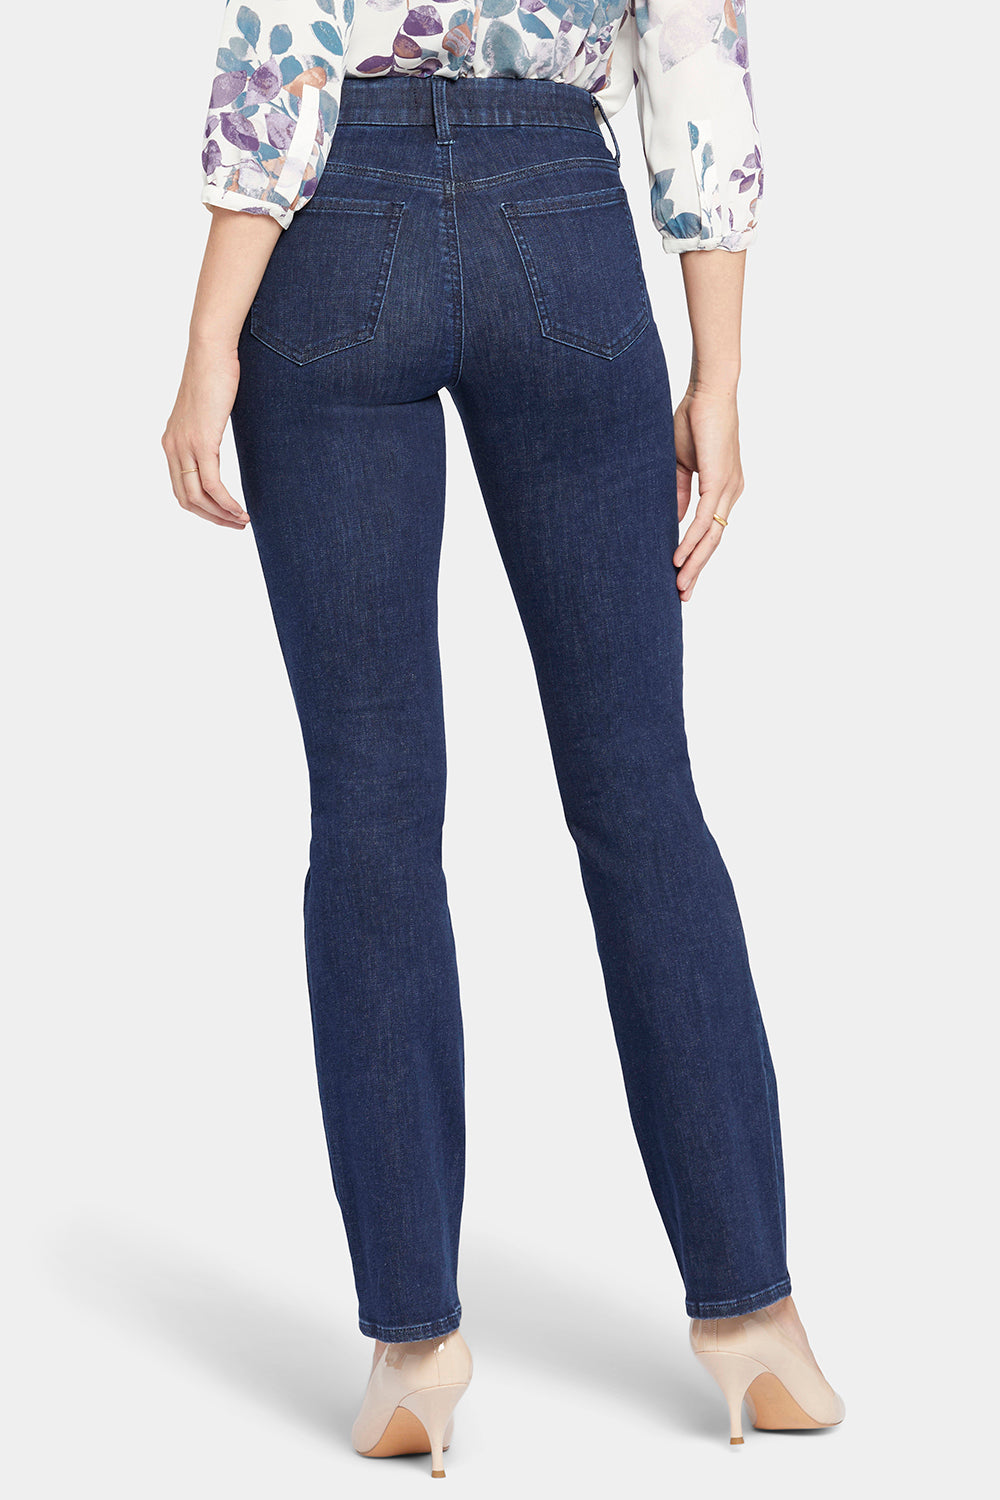 Waist-Match™ Marilyn Straight Jeans In Petite - Inspire Blue | NYDJ